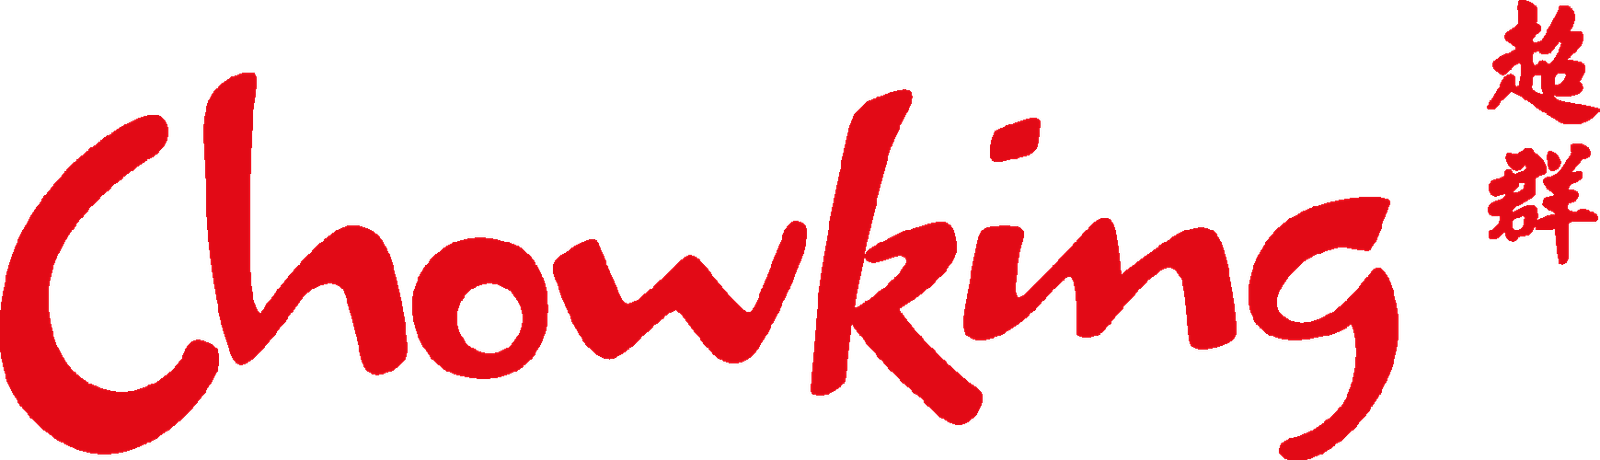 ChowKing-Logo-Vector.svg-